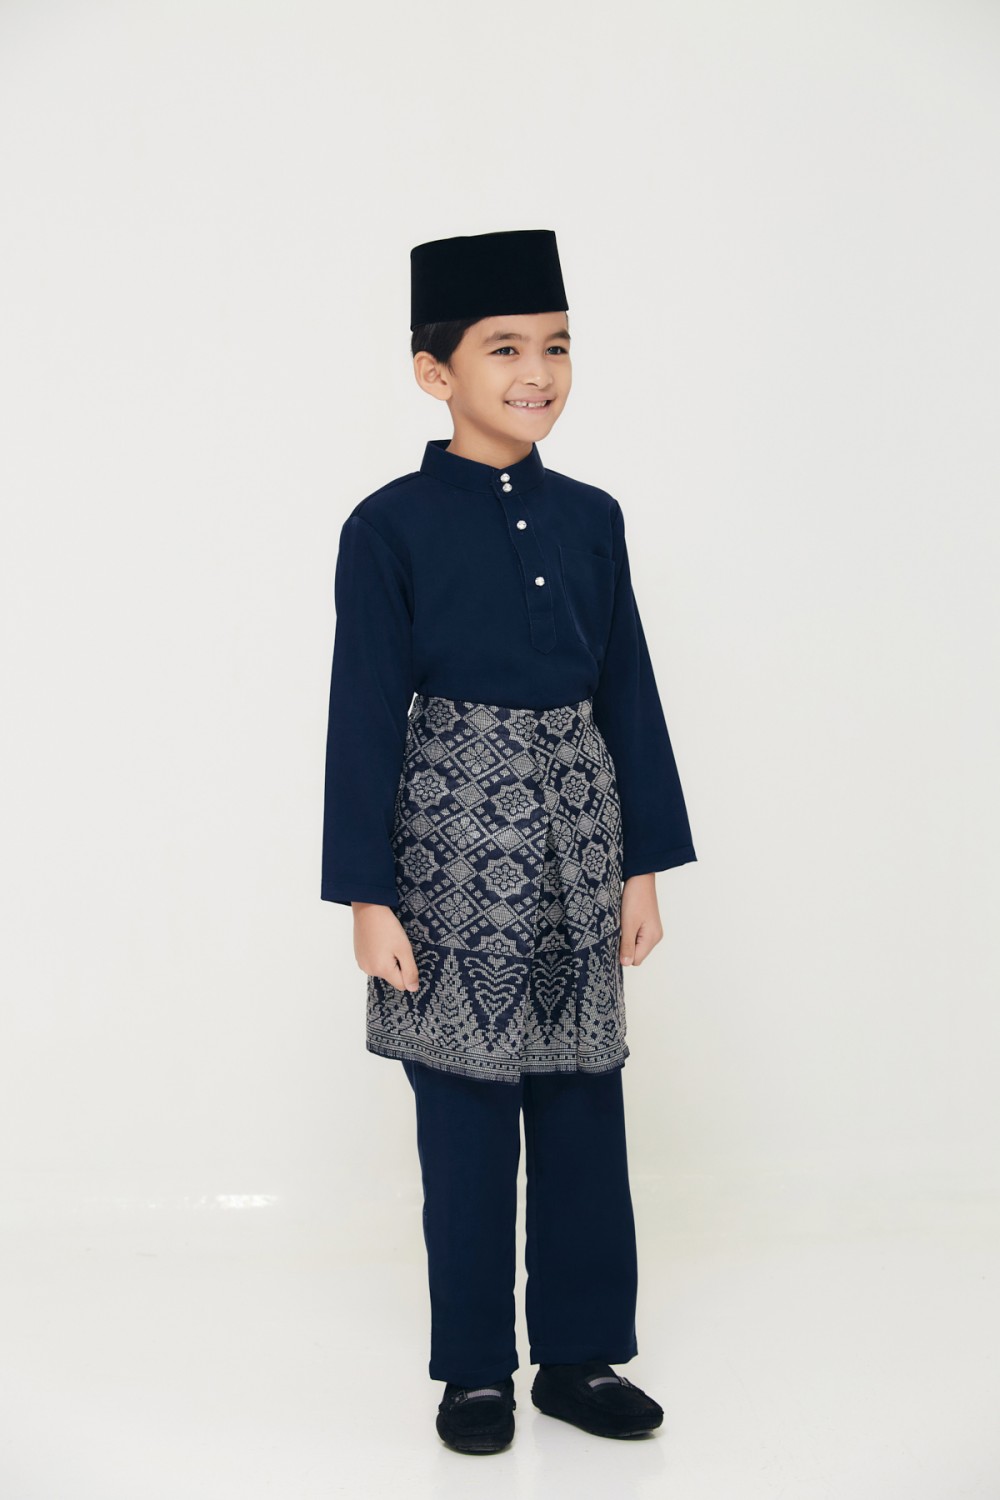 Baju Melayu Juma Kids In Navy Blue